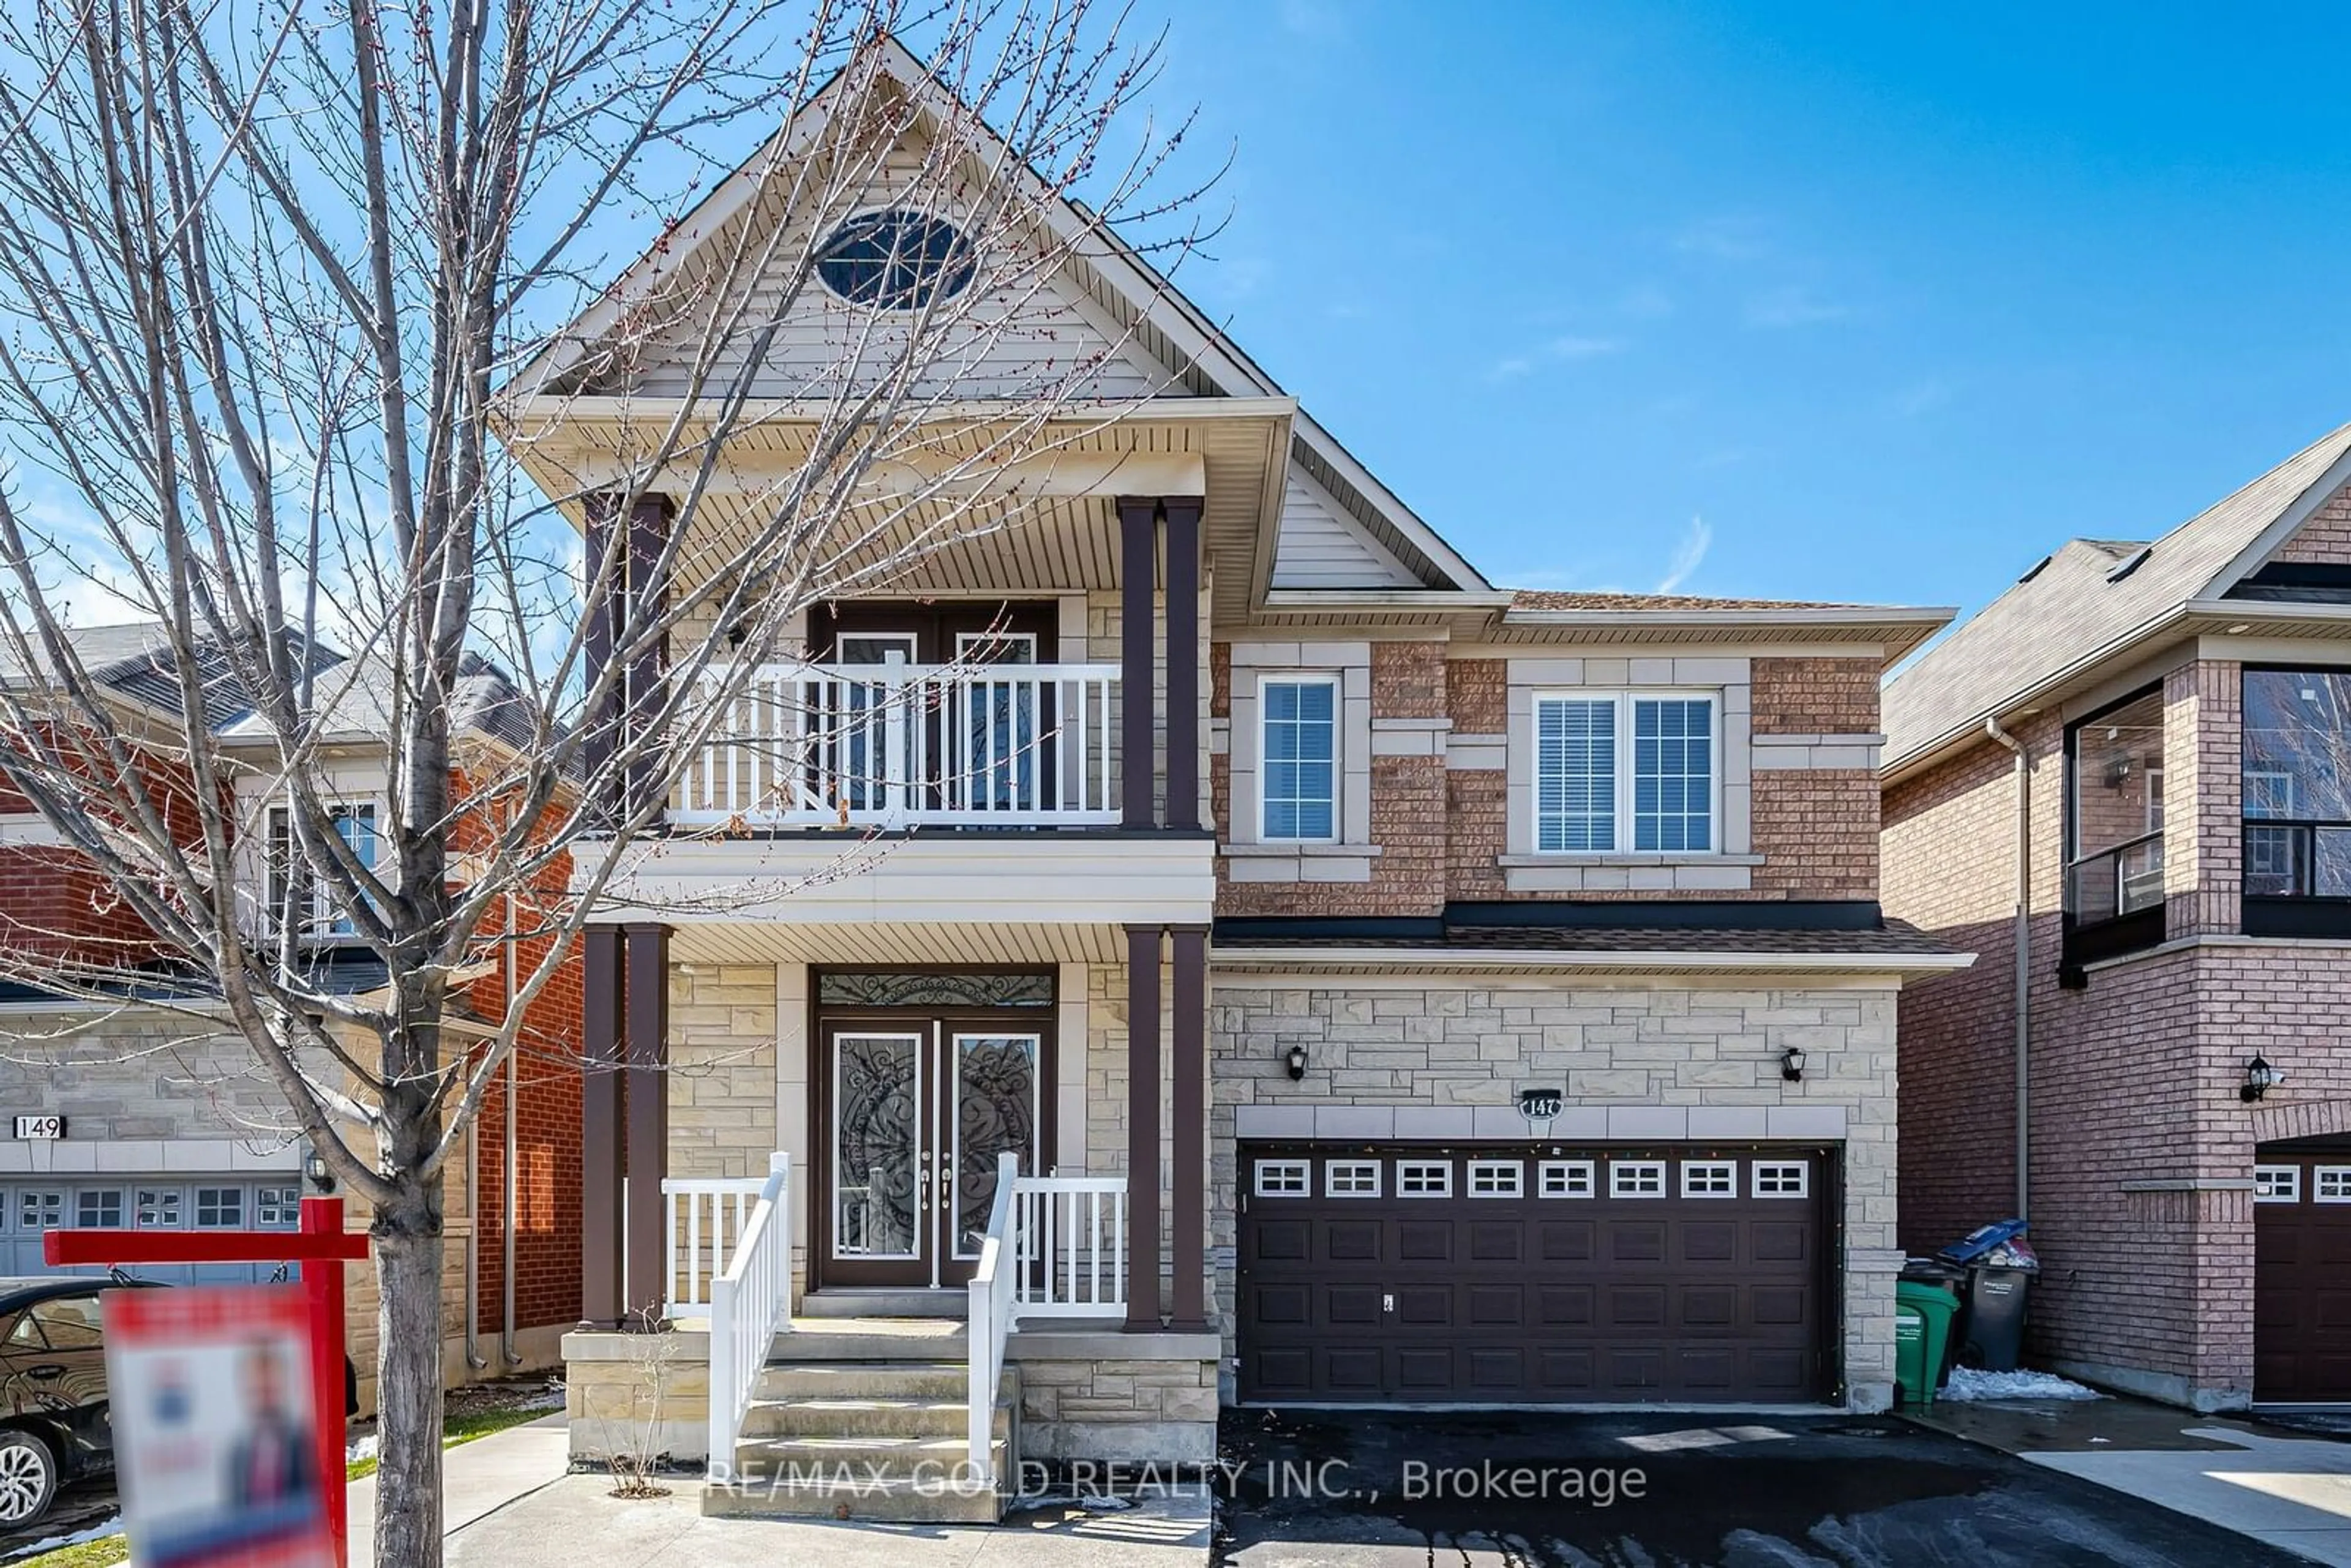 Home with brick exterior material for 147 Calderstone Rd, Brampton Ontario L6P 2M7